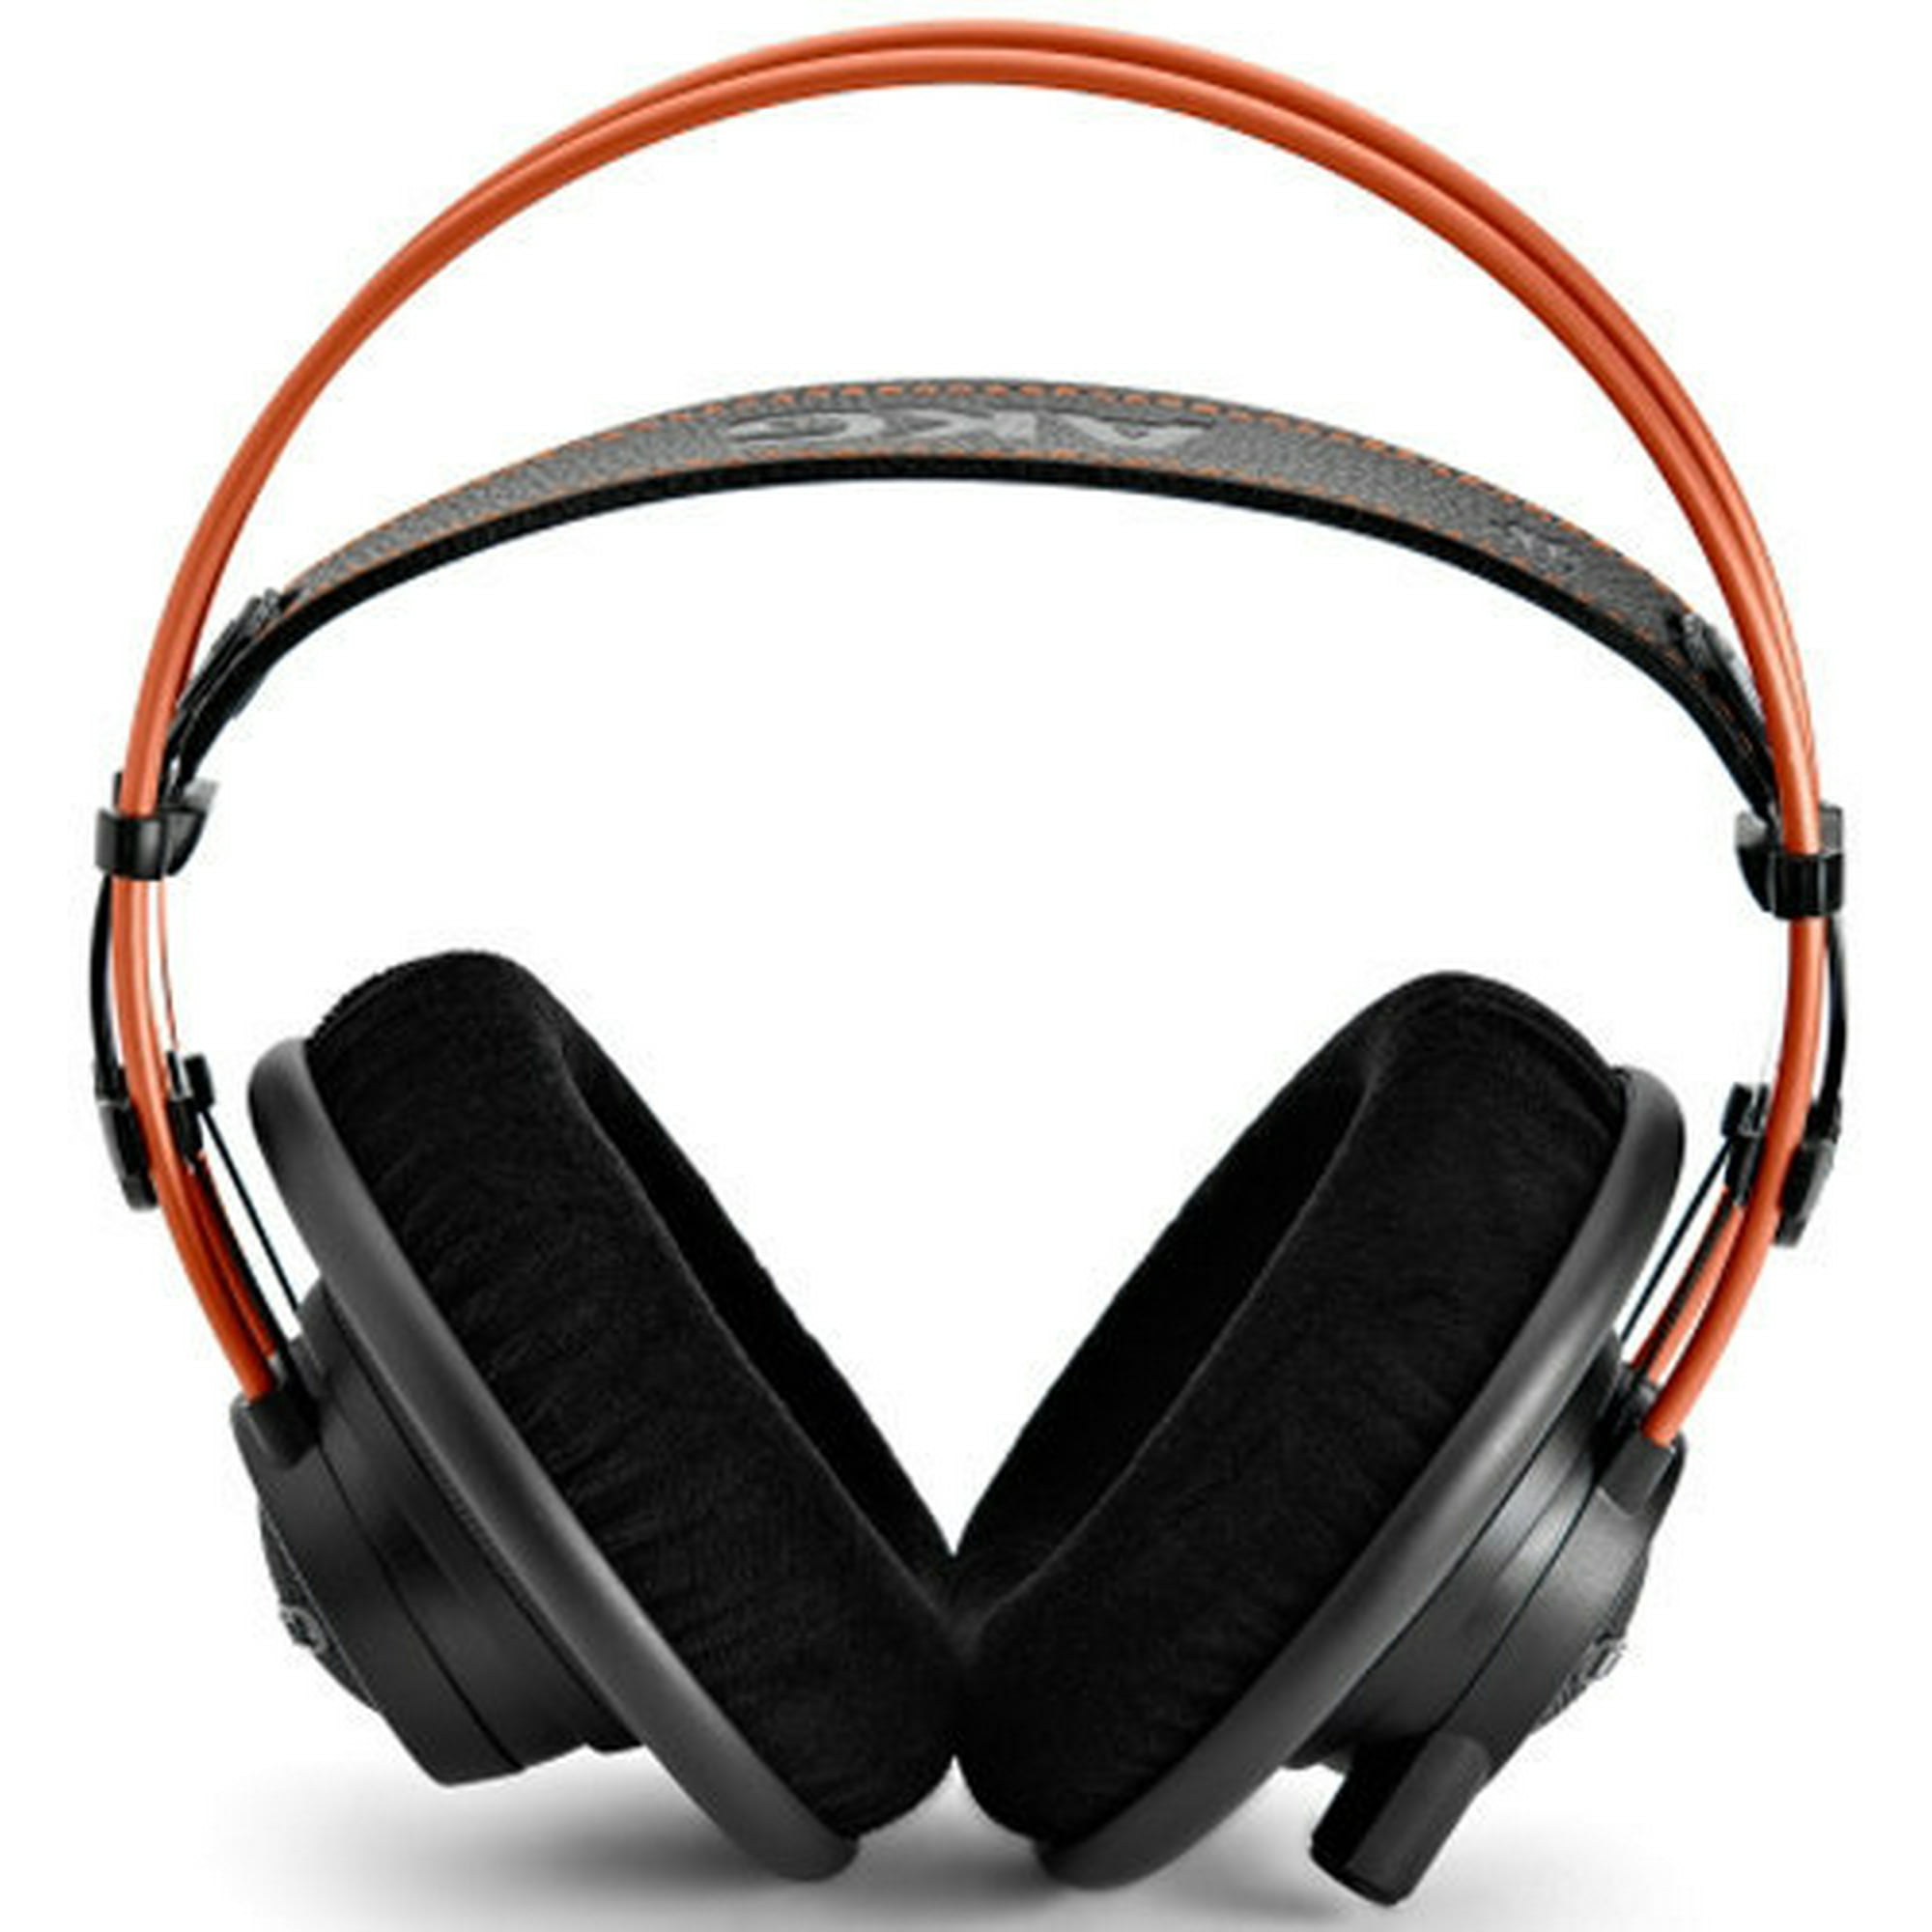 AKG K712 Pro Reference Studio Headphones | Walmart Canada